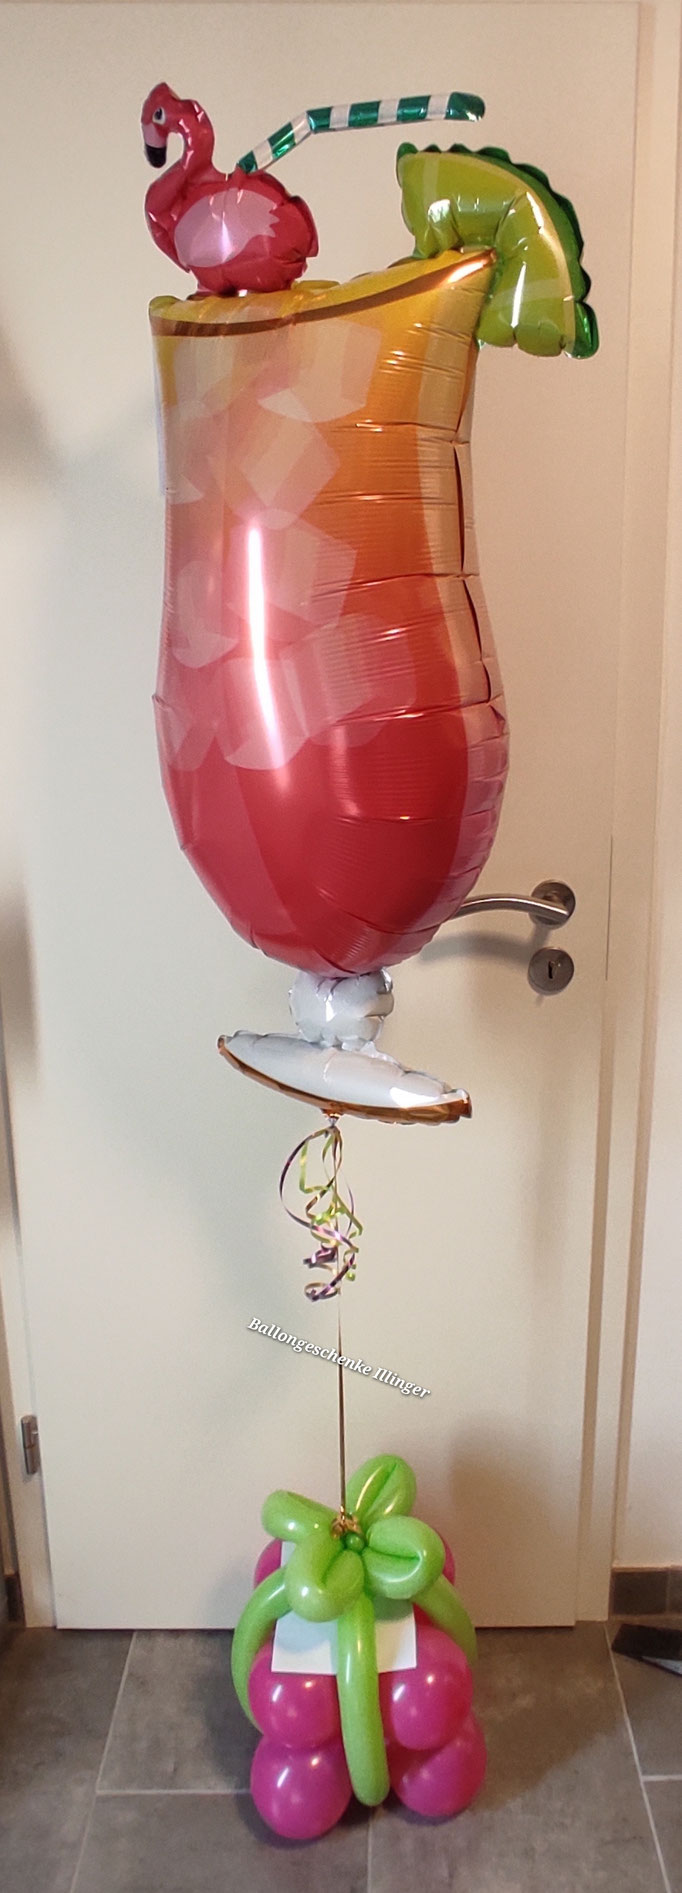 Cocktailglas mit Ballonkiste - 19,00€